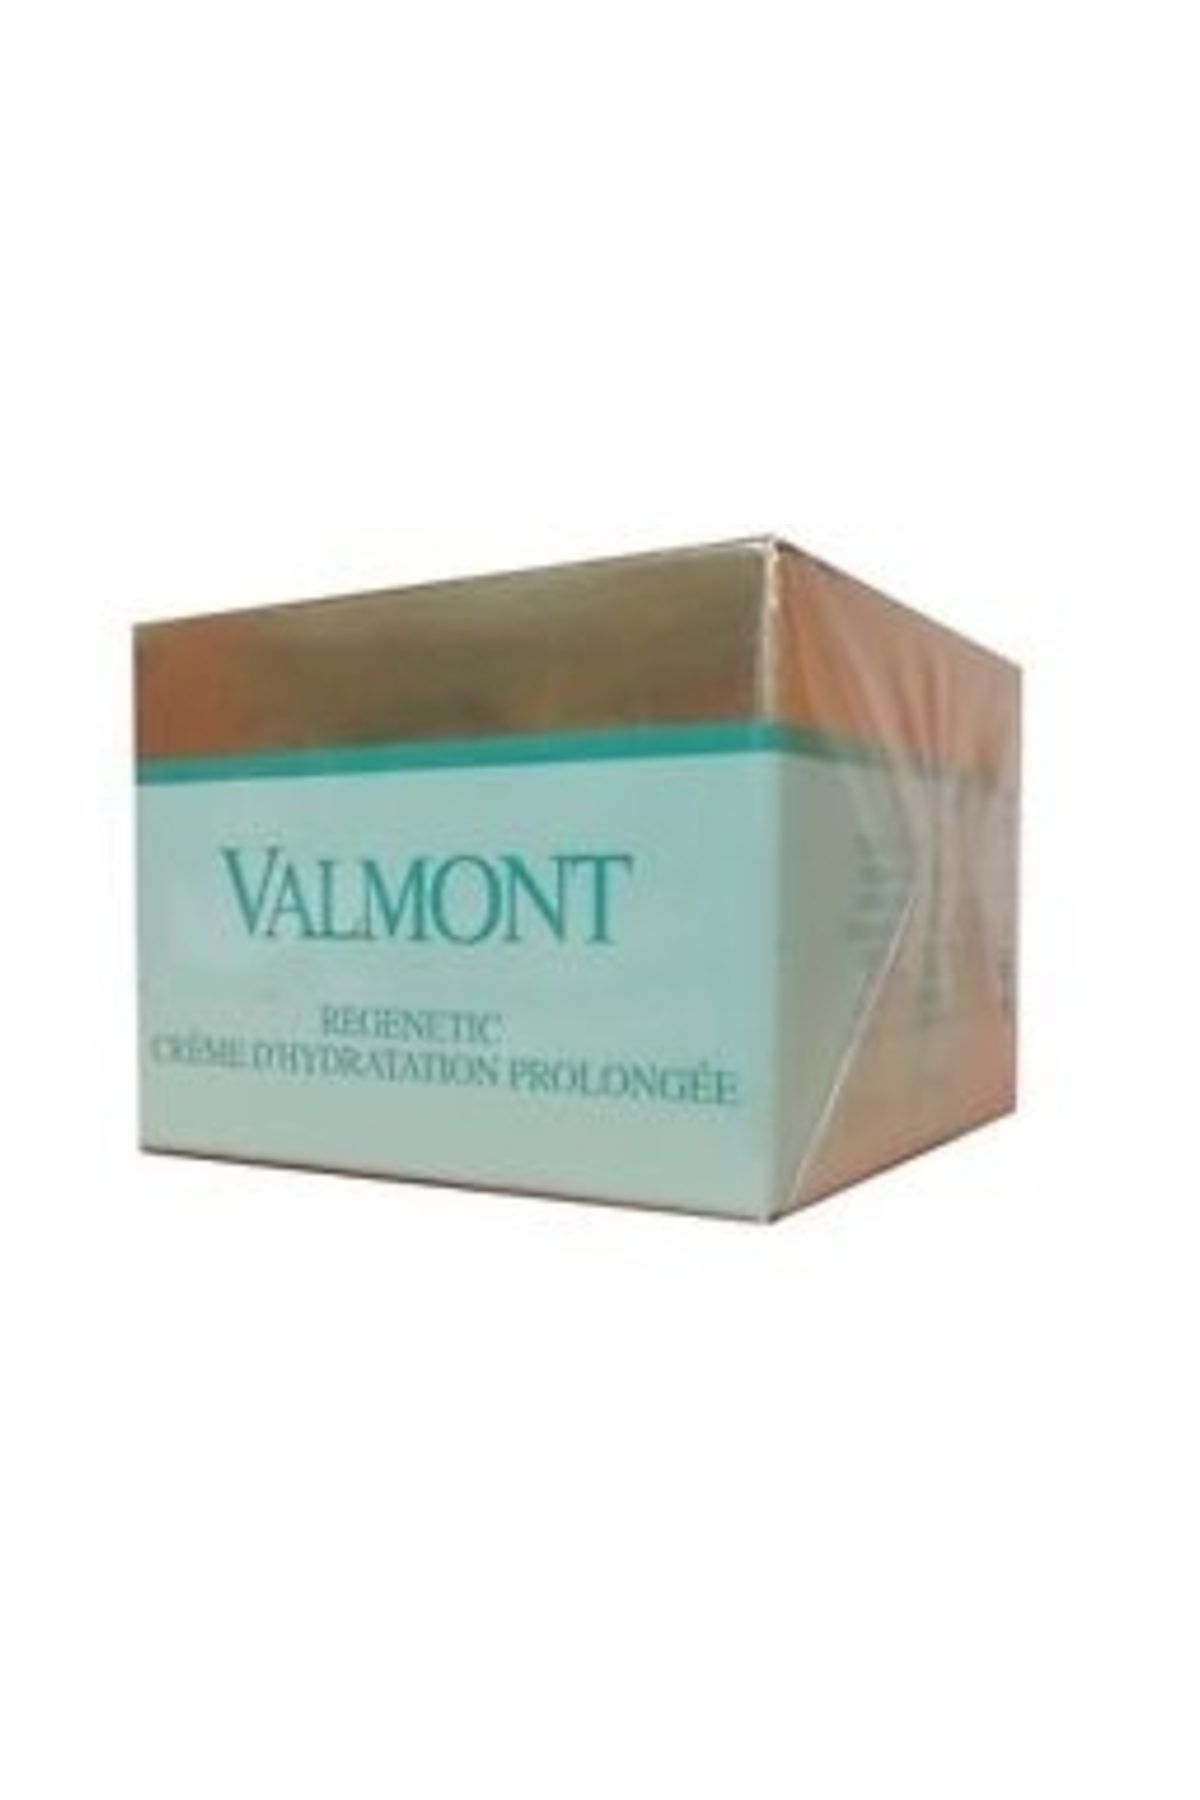 Valmont Regenetic Cream D'hydratation Prolongee 50 ml 7612017050225